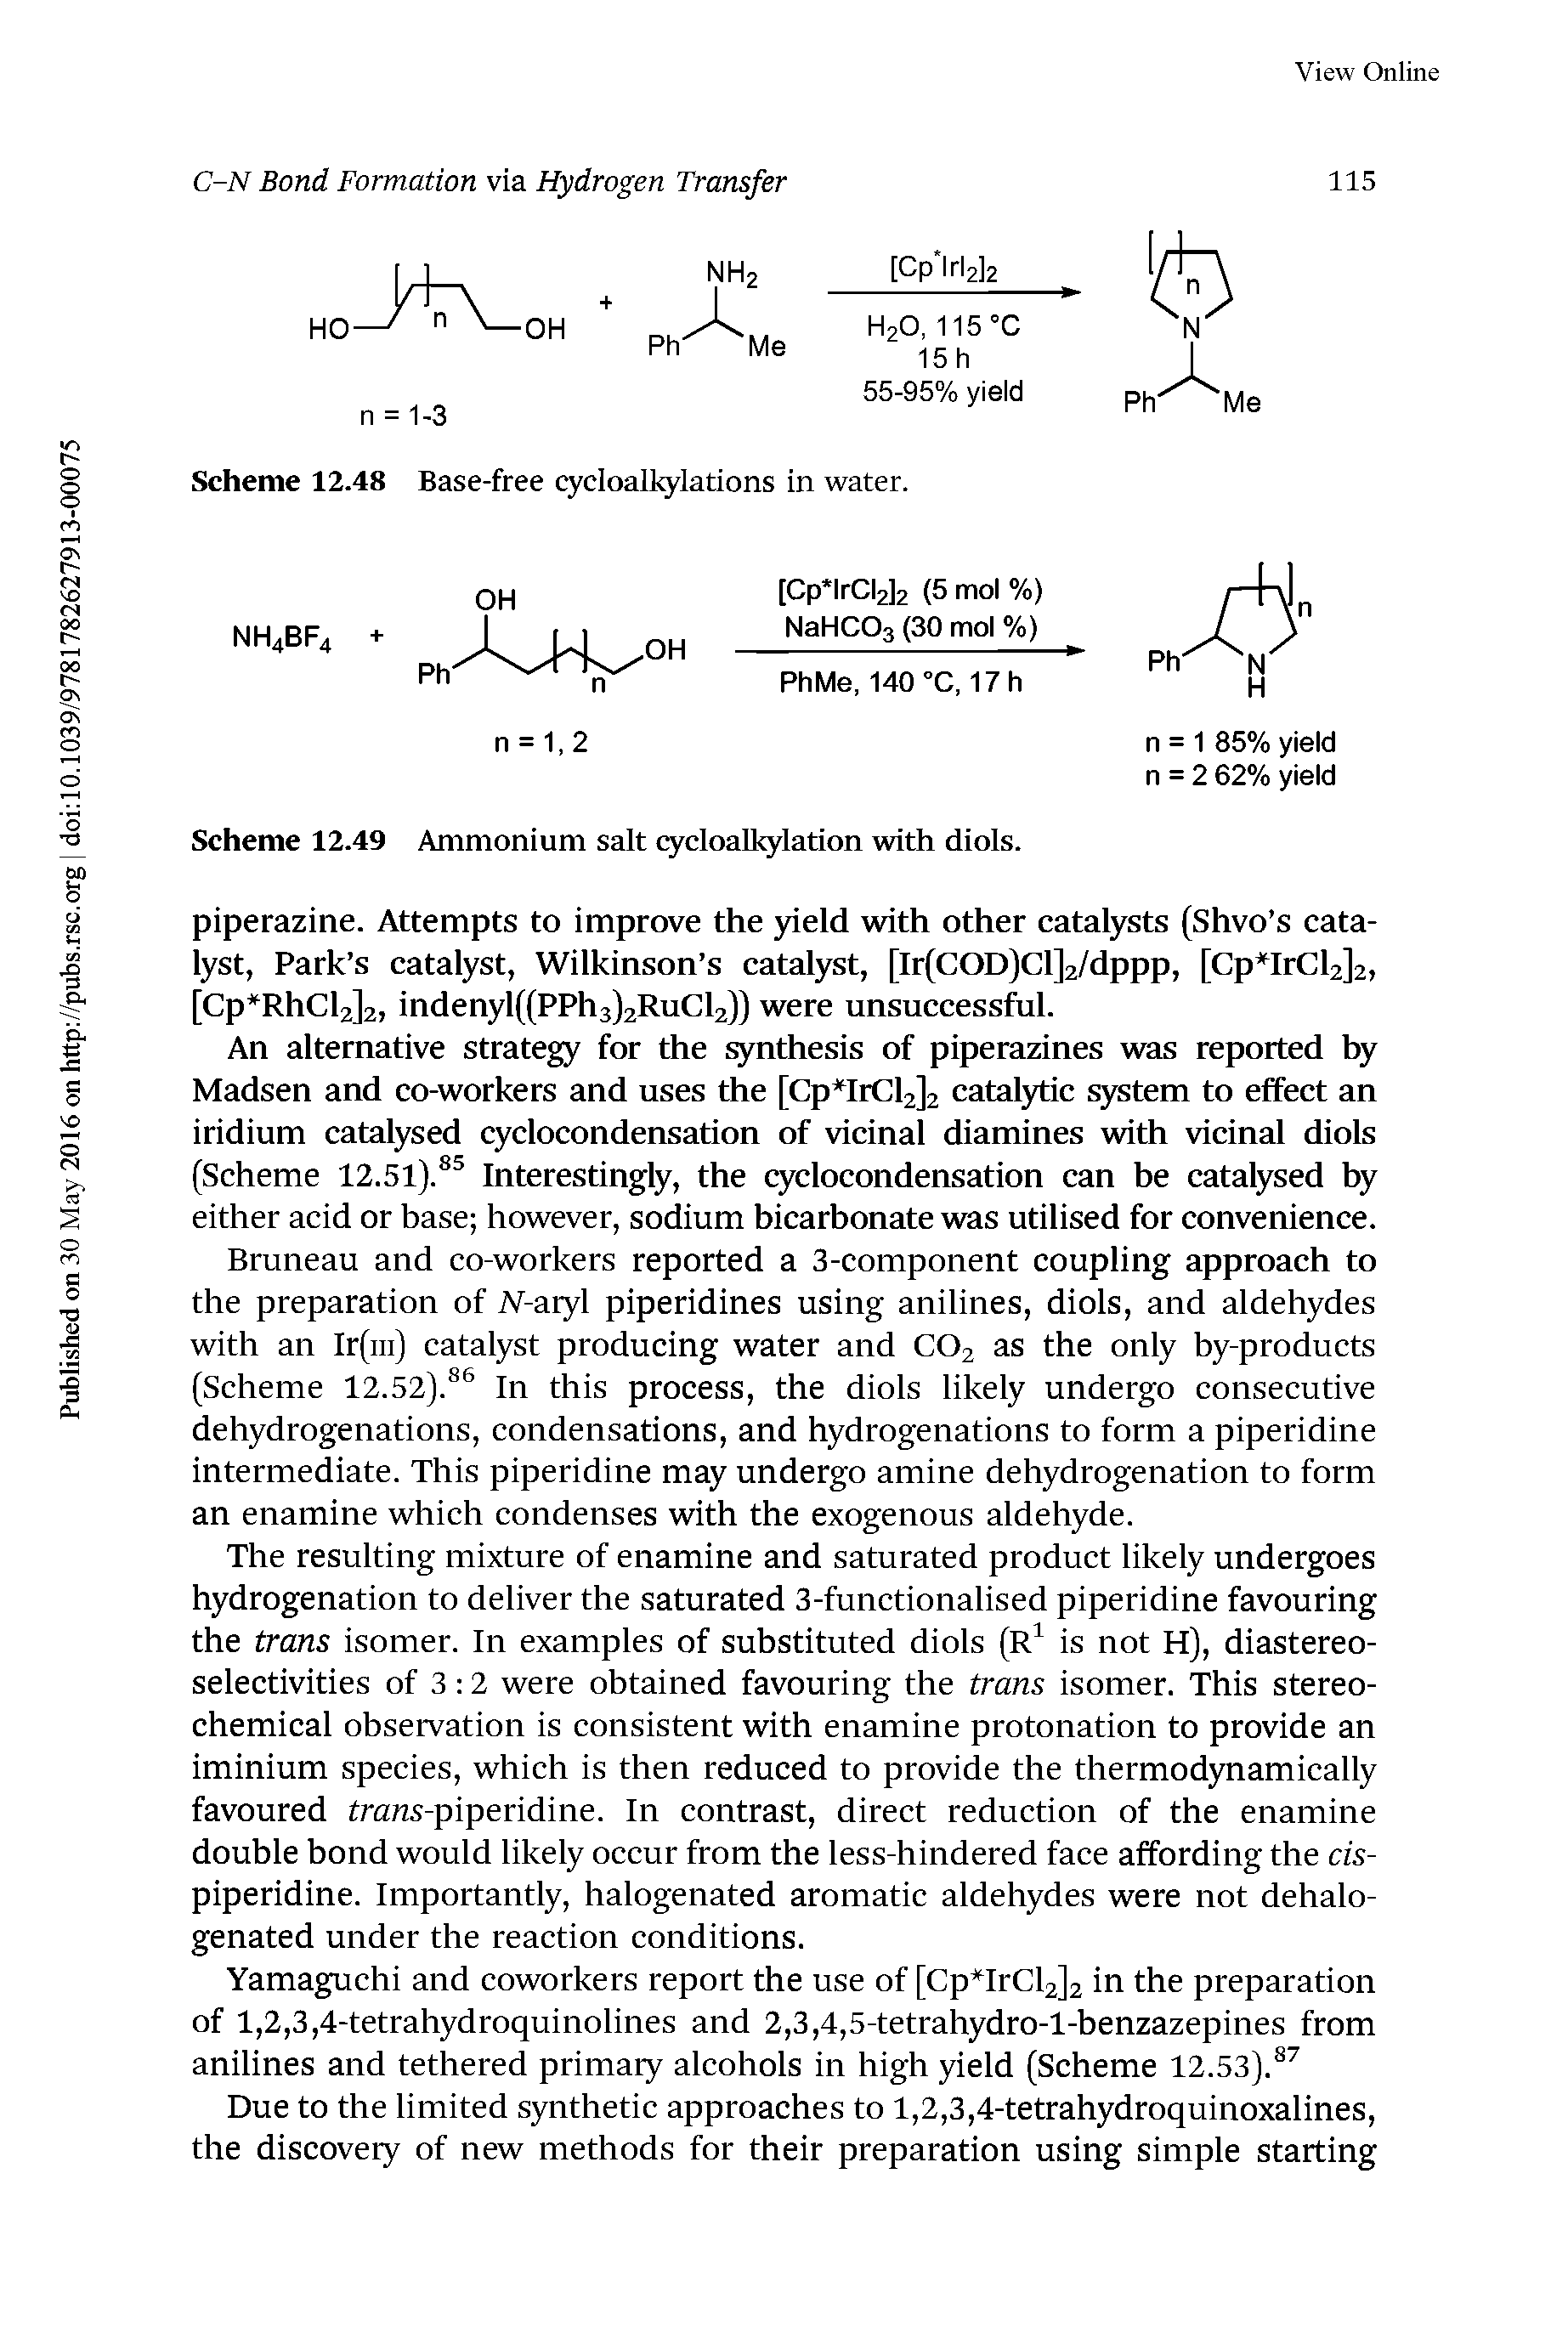 Scheme 12.49 Ammonium salt cycloalkylation with diols.